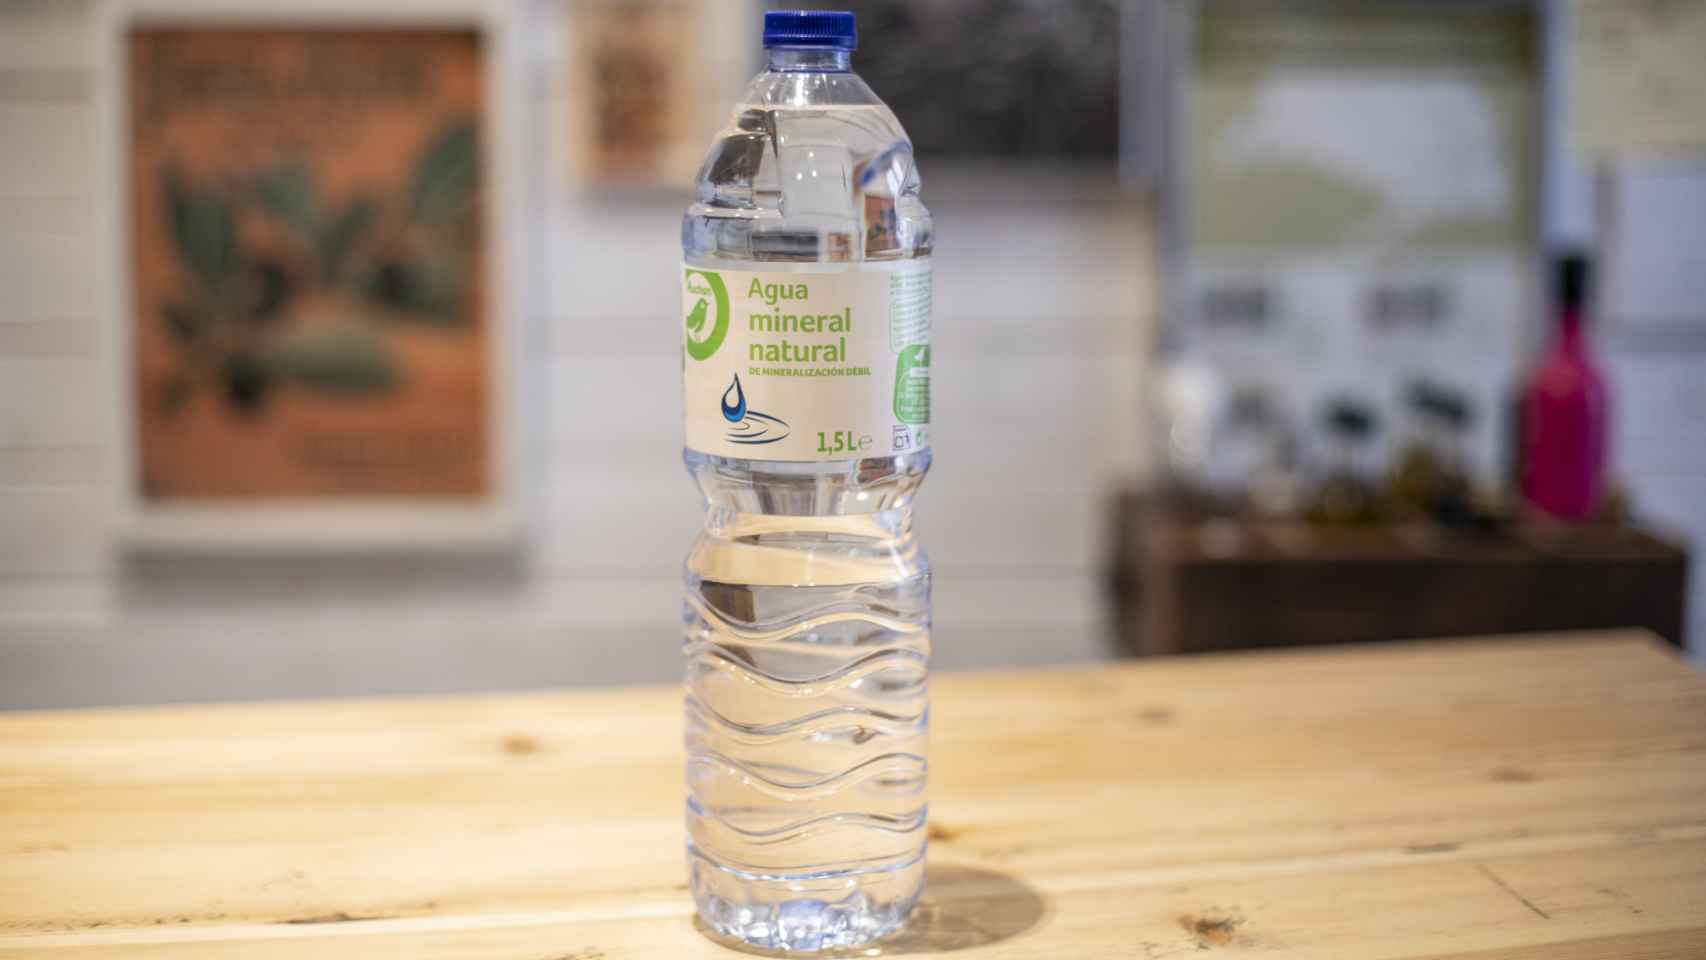 El agua mineral natural de Auchan, la marca blanca de Alcampo.